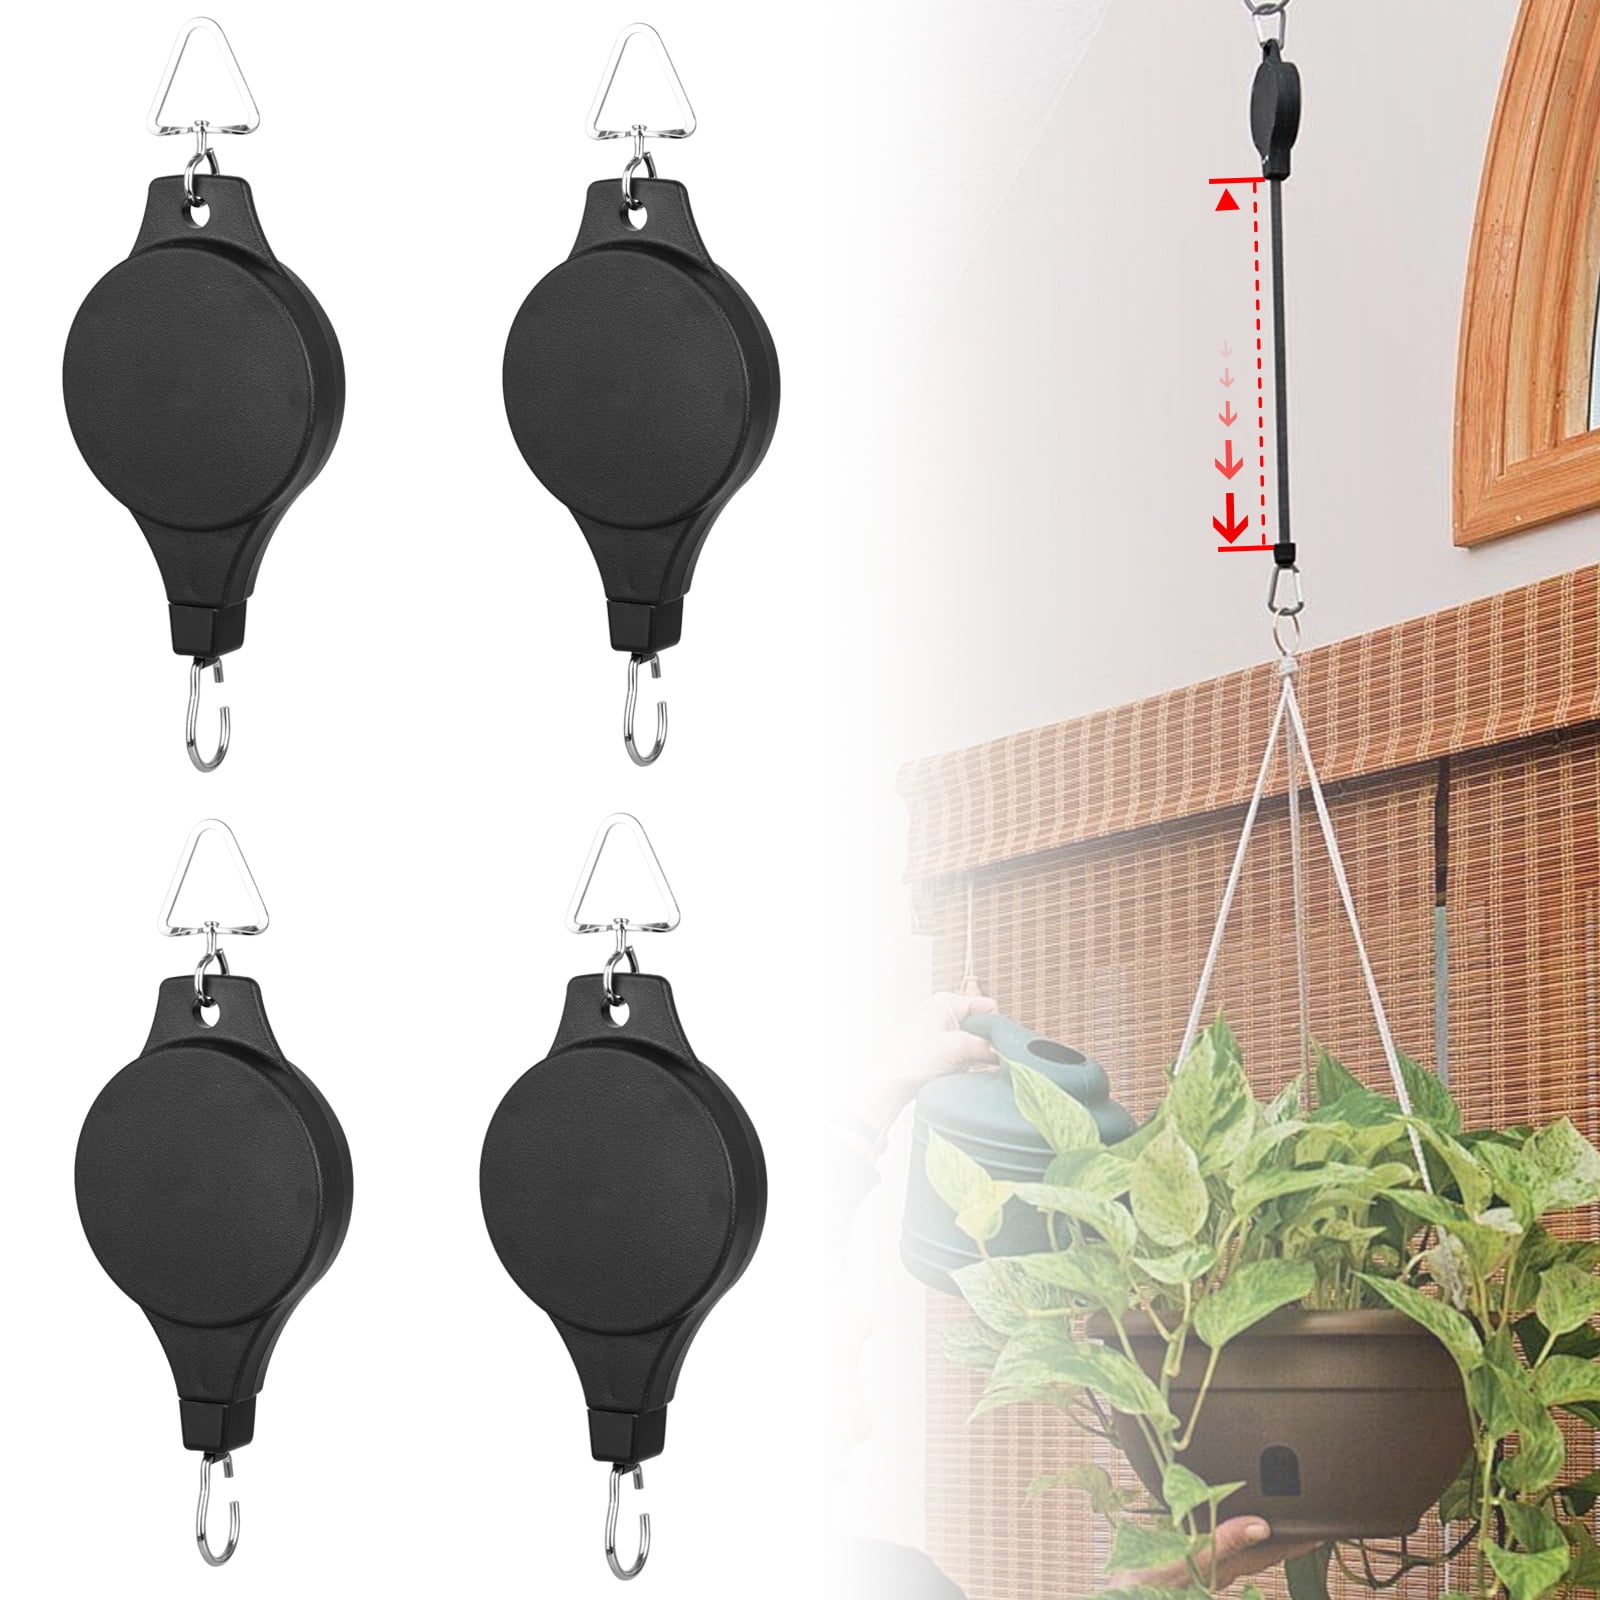 Ochoos Retractable Hook Easy Reach Pull Down Hanger Pulley Plant Flowerpot Hanging Hook Garden Tool Color: Black 